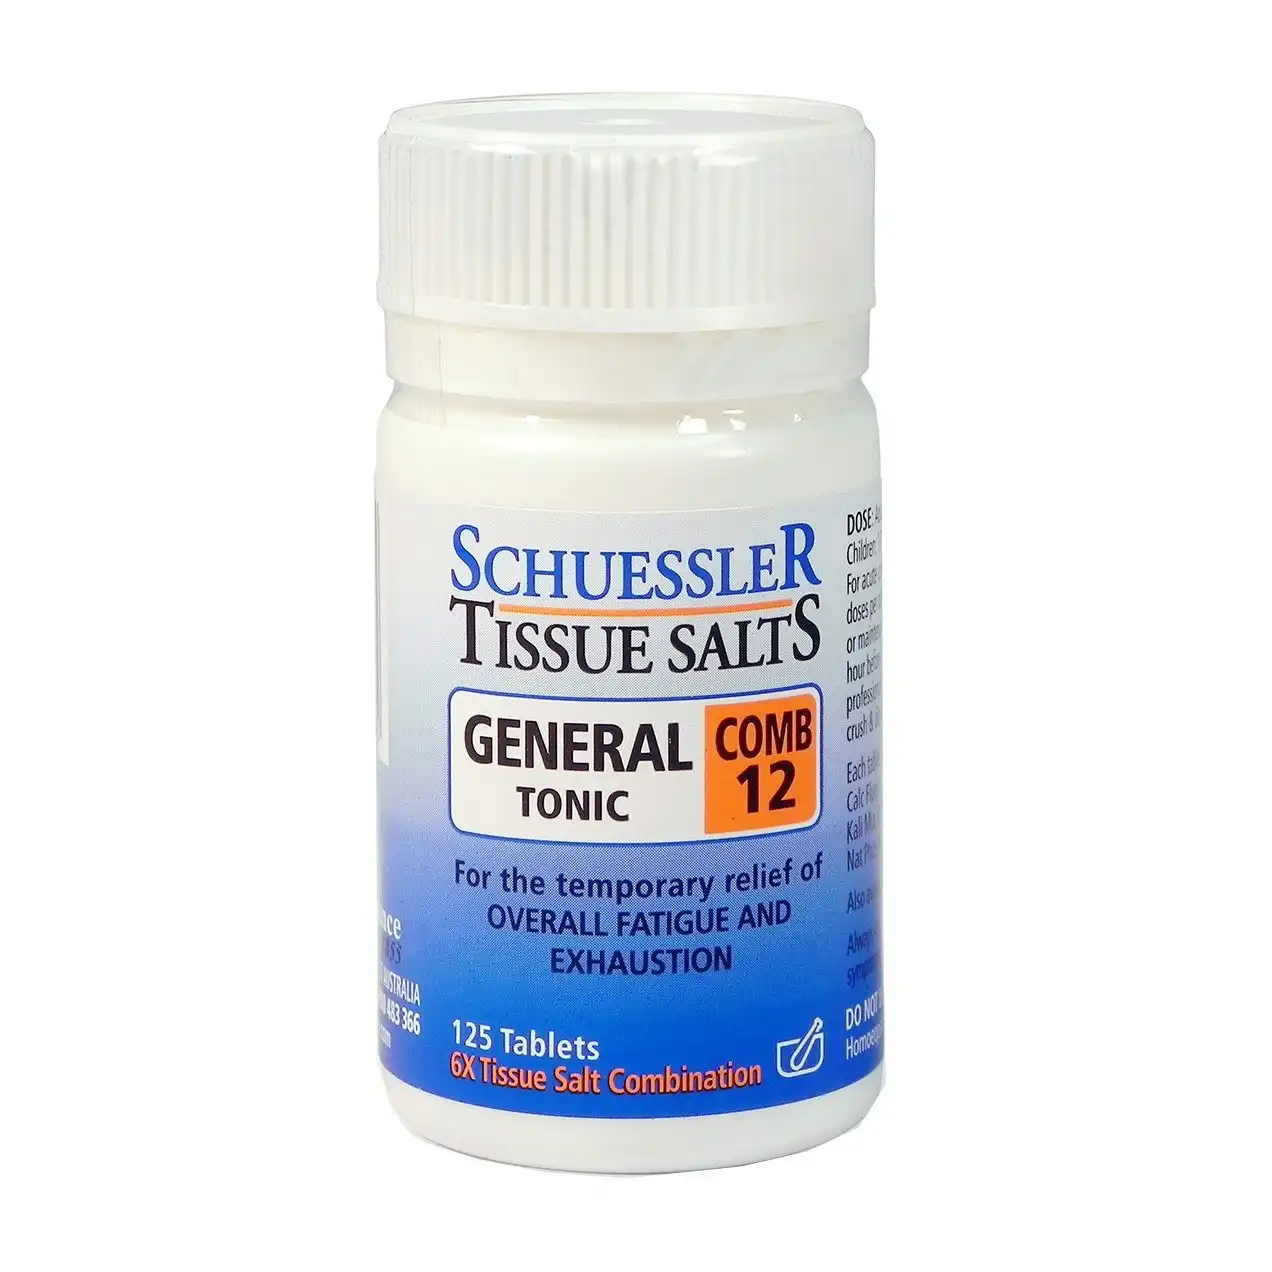 Schuessler Tissue Salts General Tonic Comb 12 125 Tablets